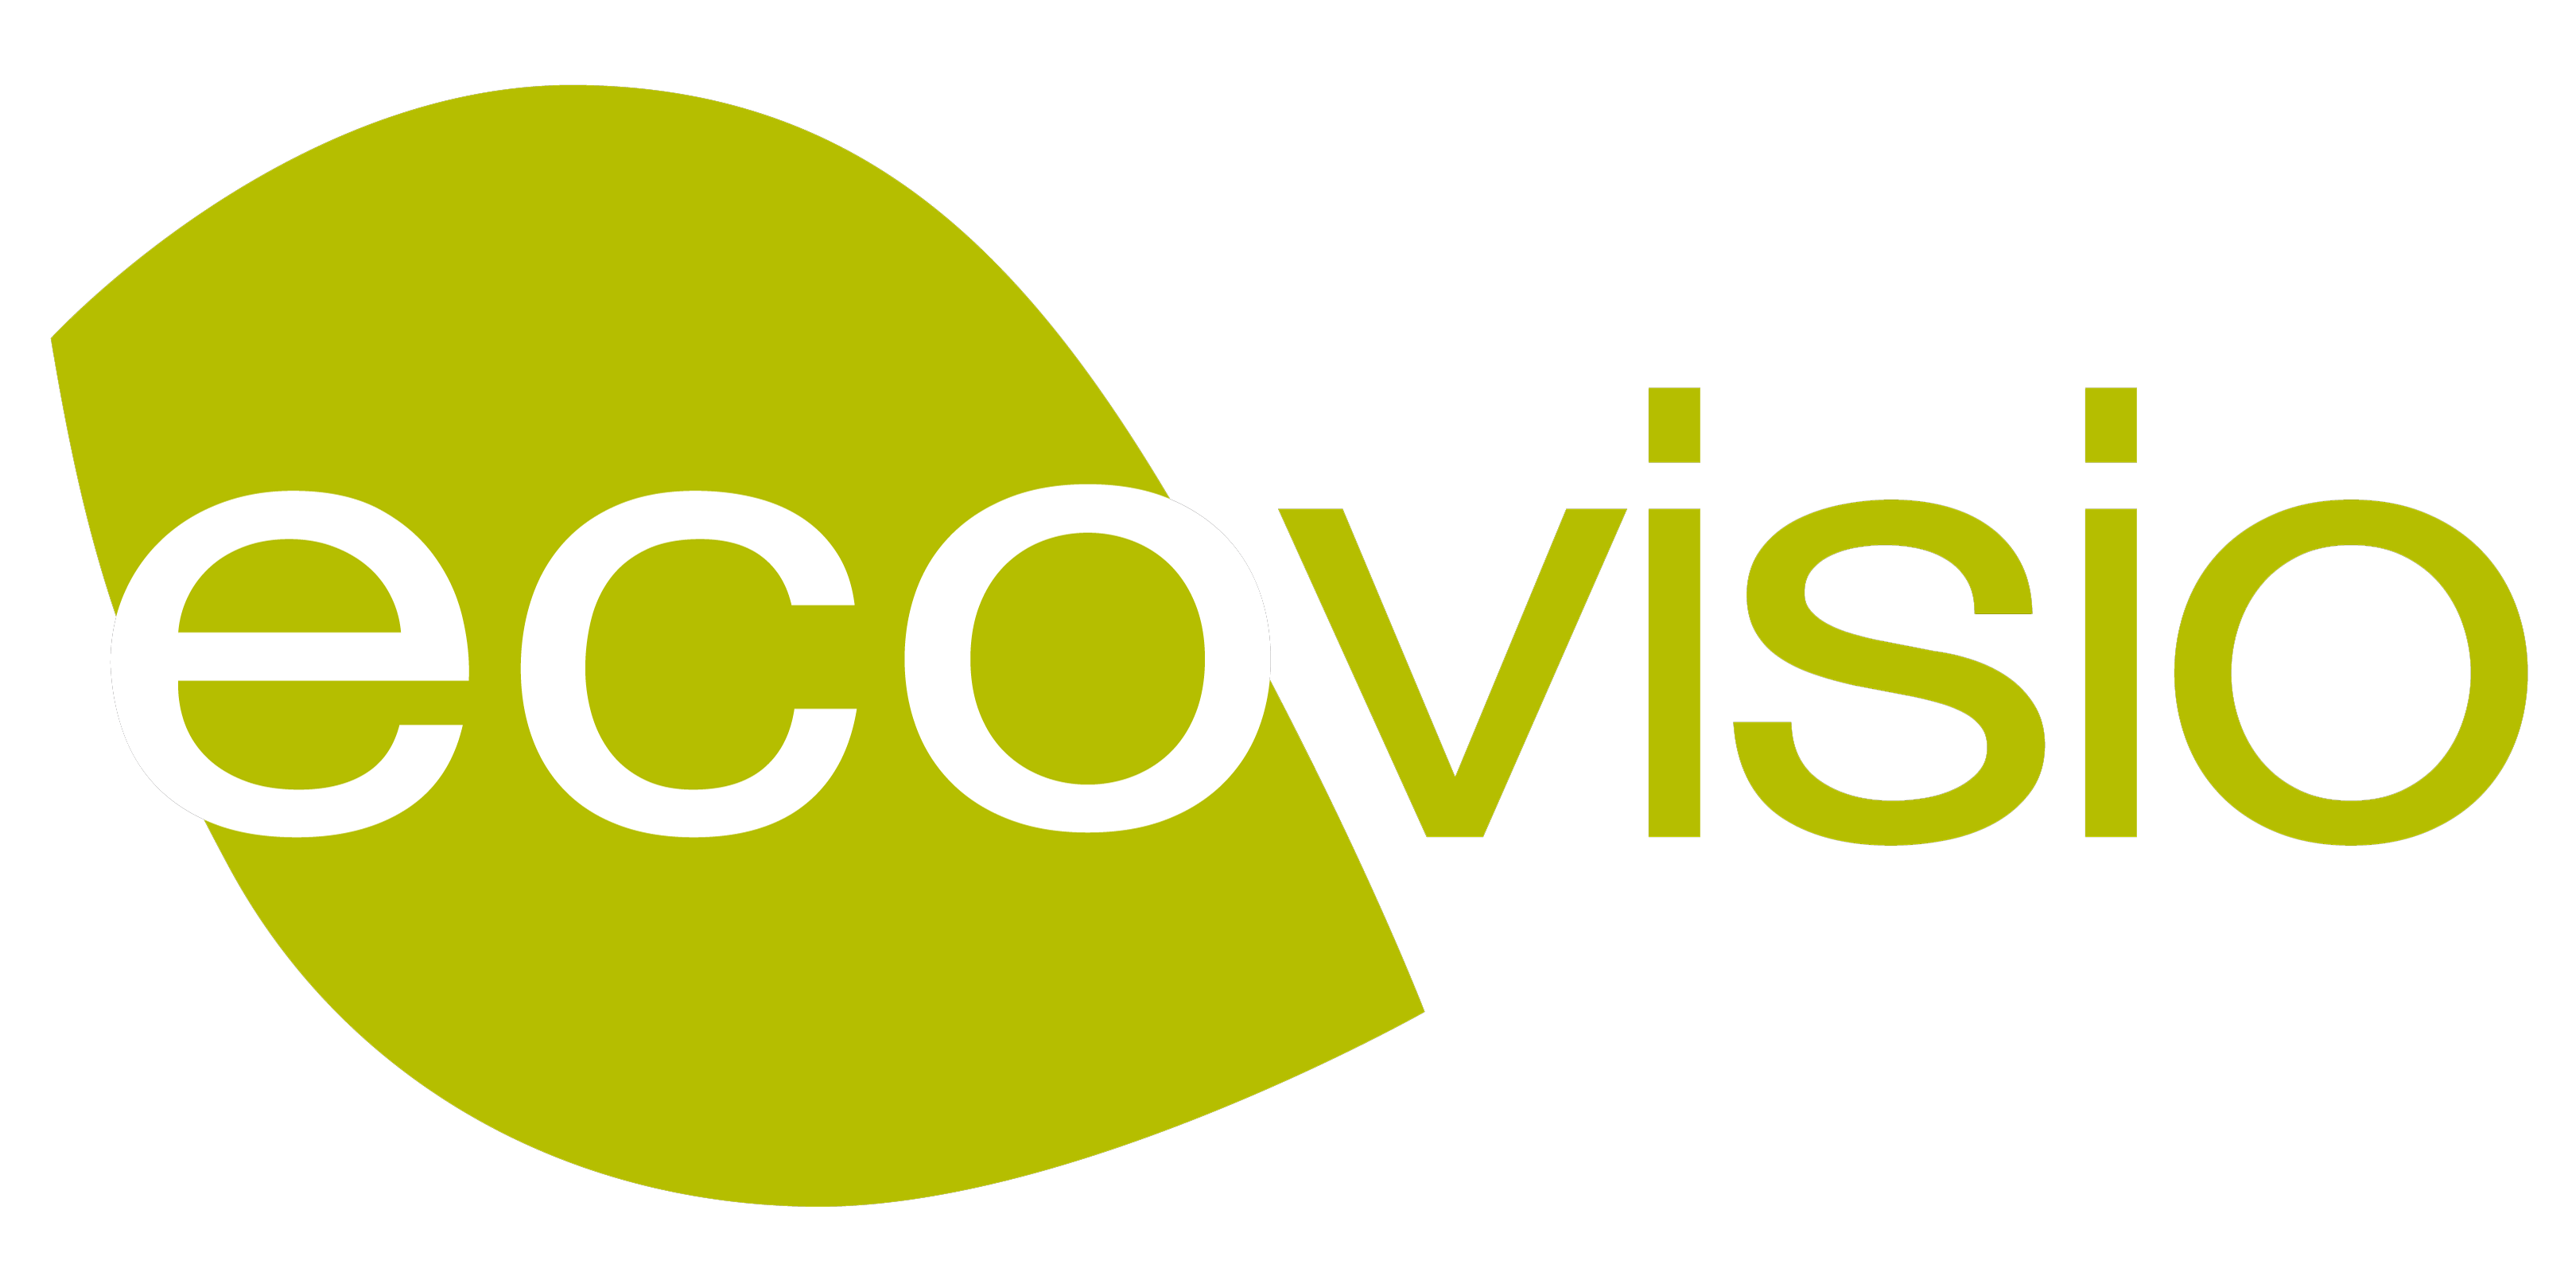 ecovisio logo01